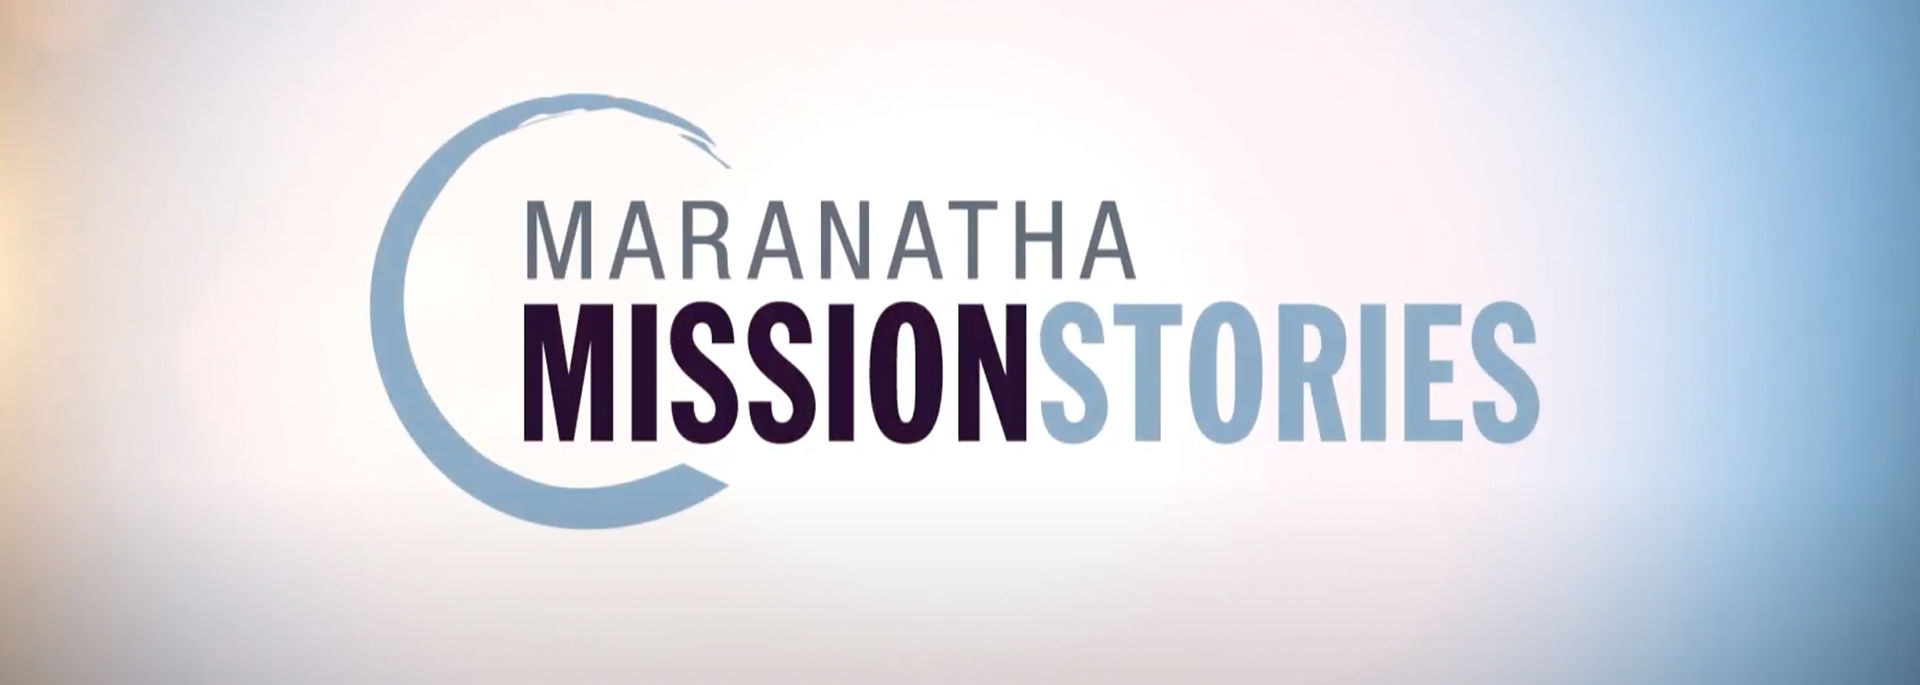 Marantha Mission Stories